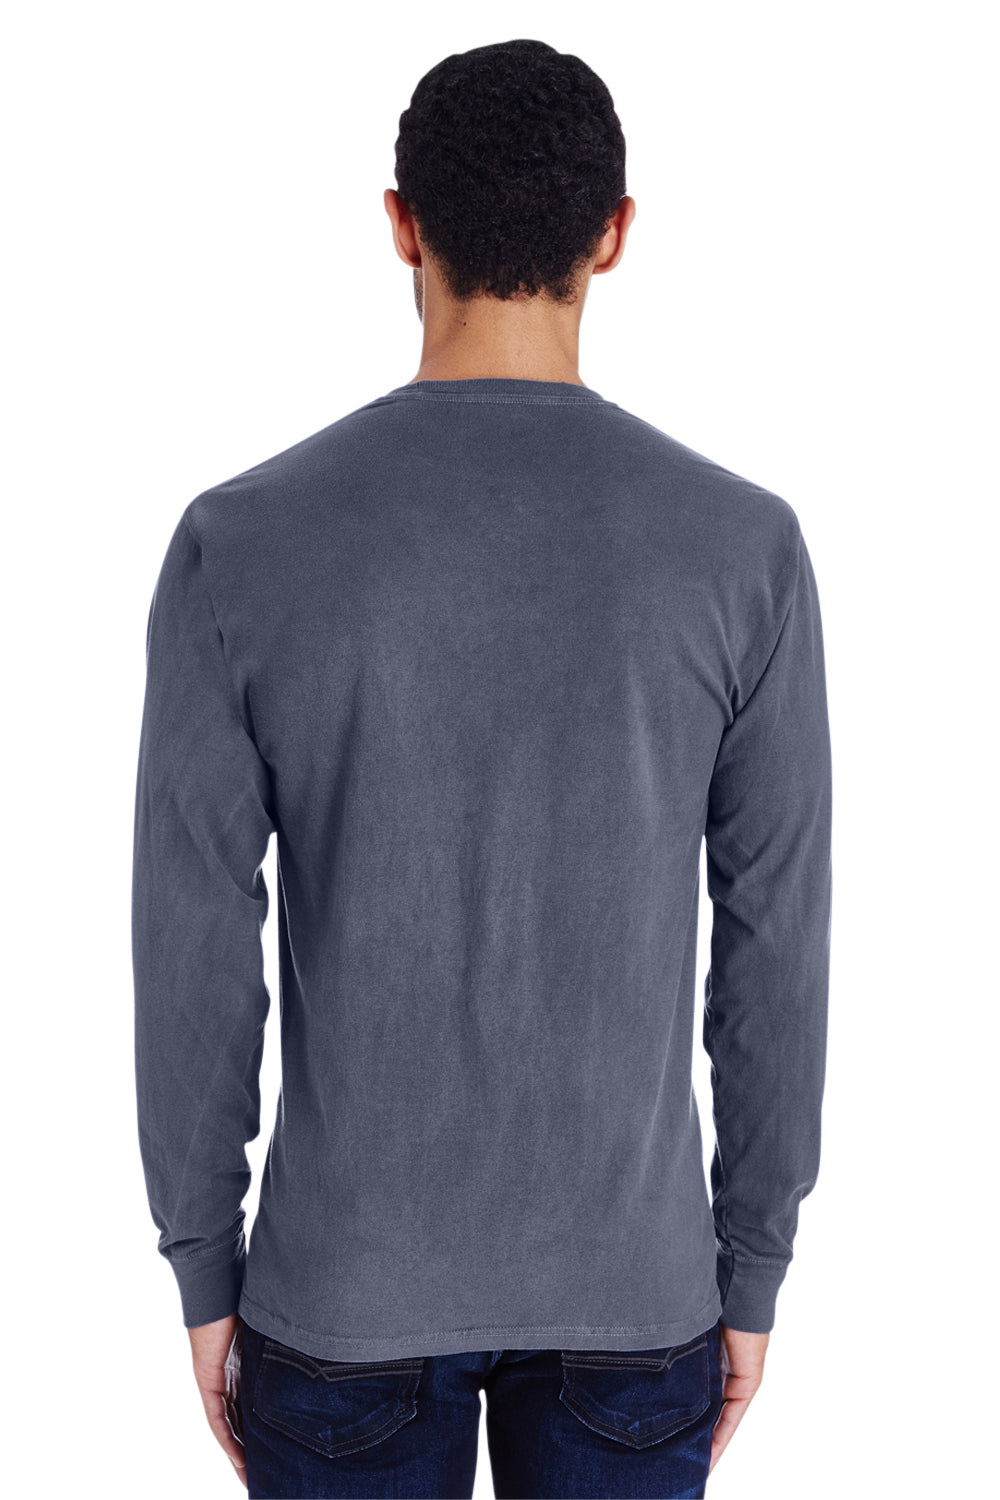 ComfortWash By Hanes GDH200 Mens Long Sleeve Crewneck T-Shirt Slate Blue Back